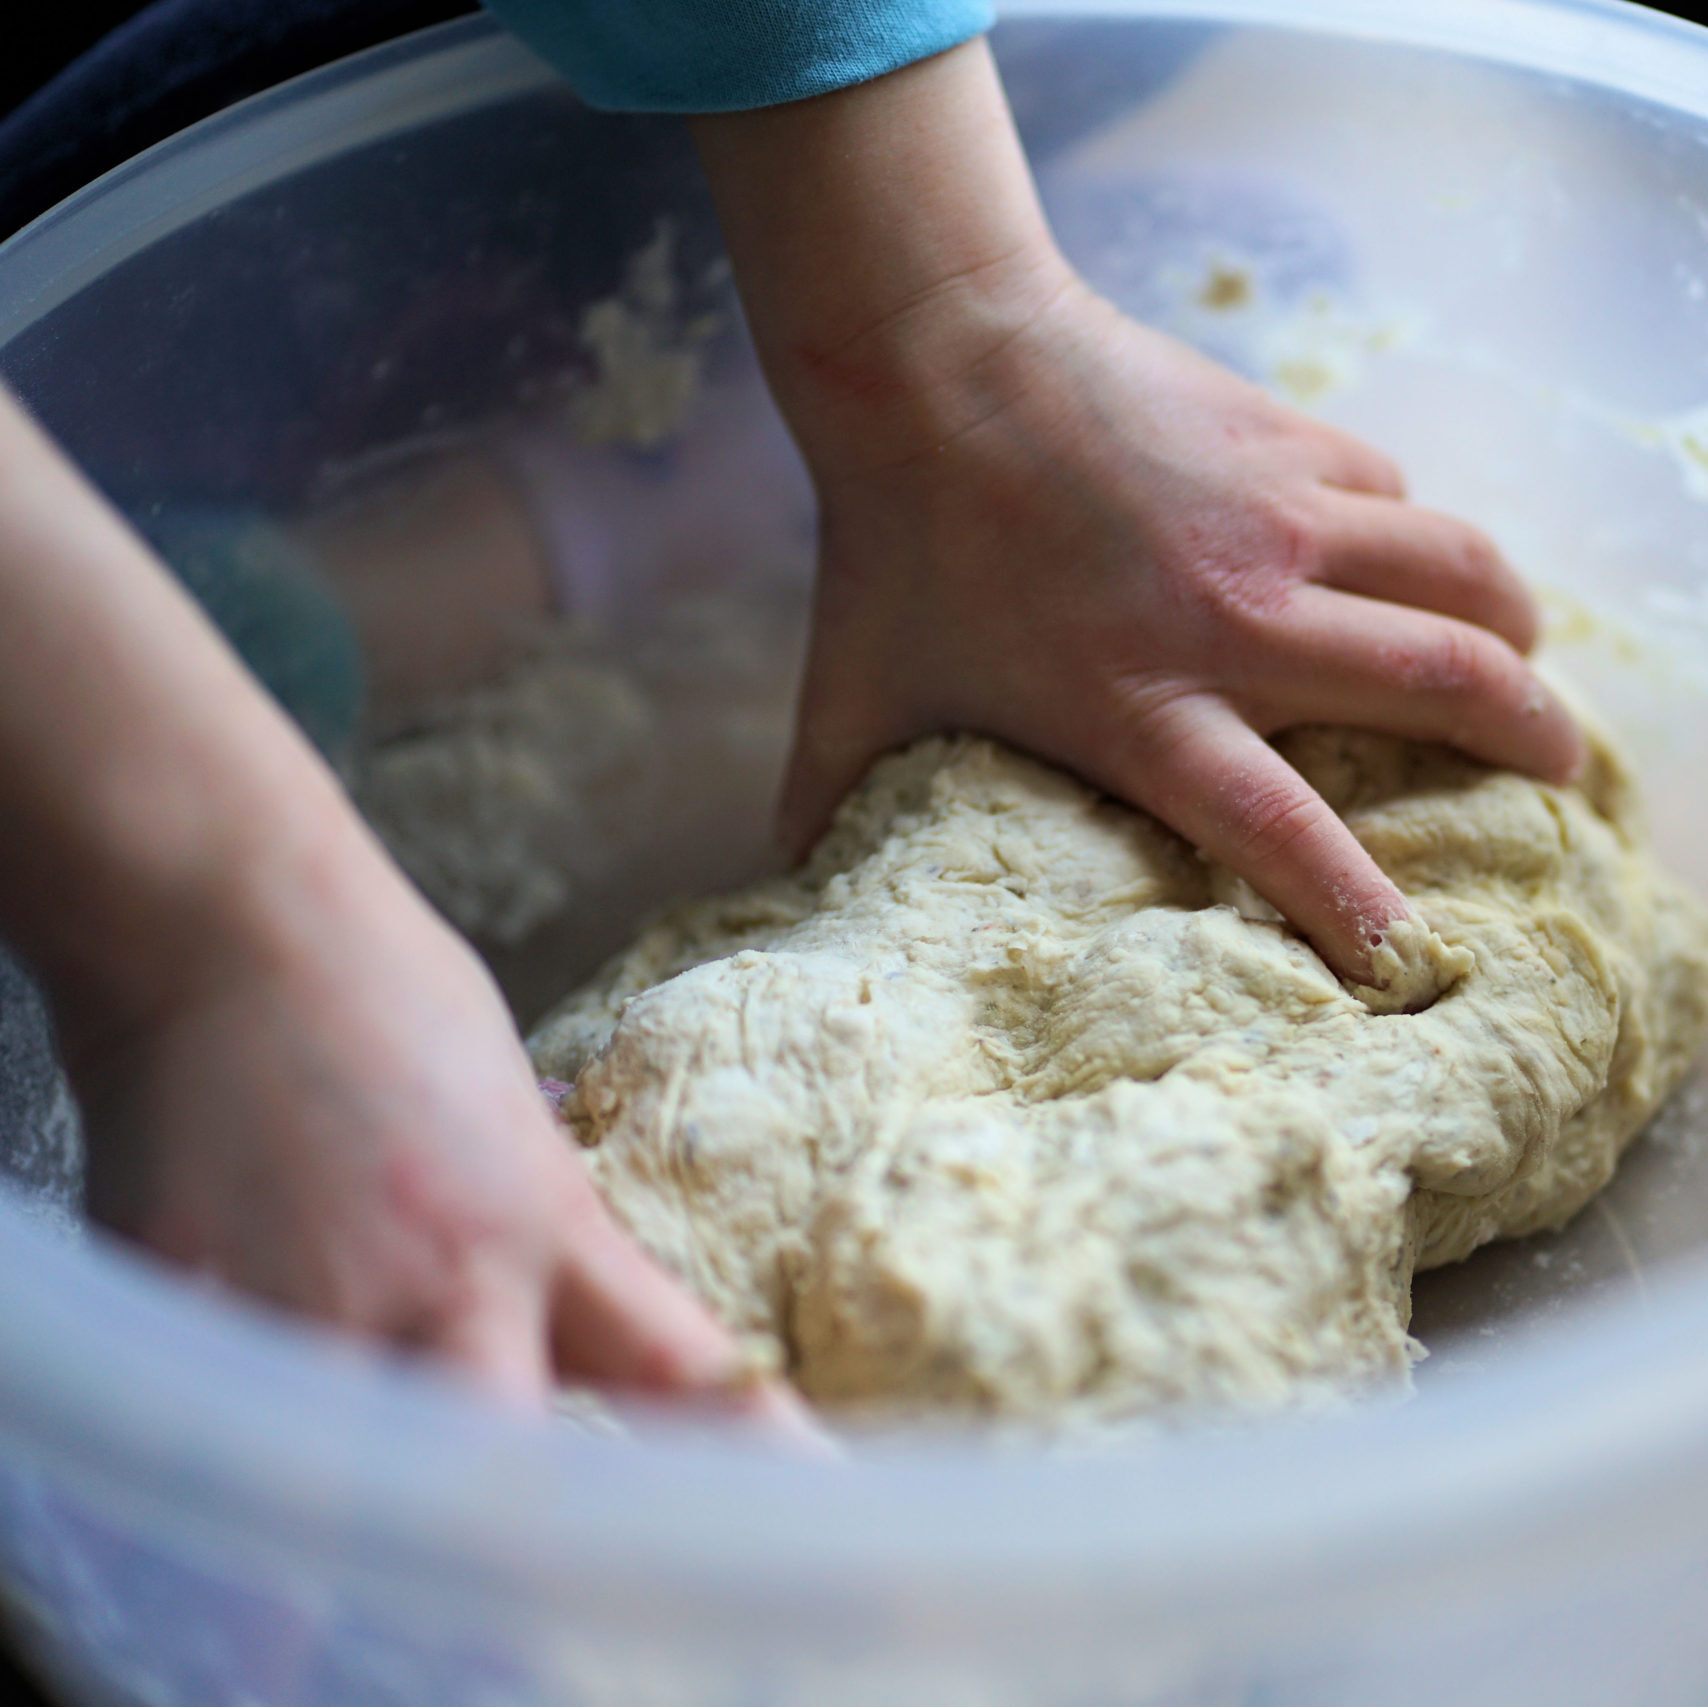 Kid kneading dough